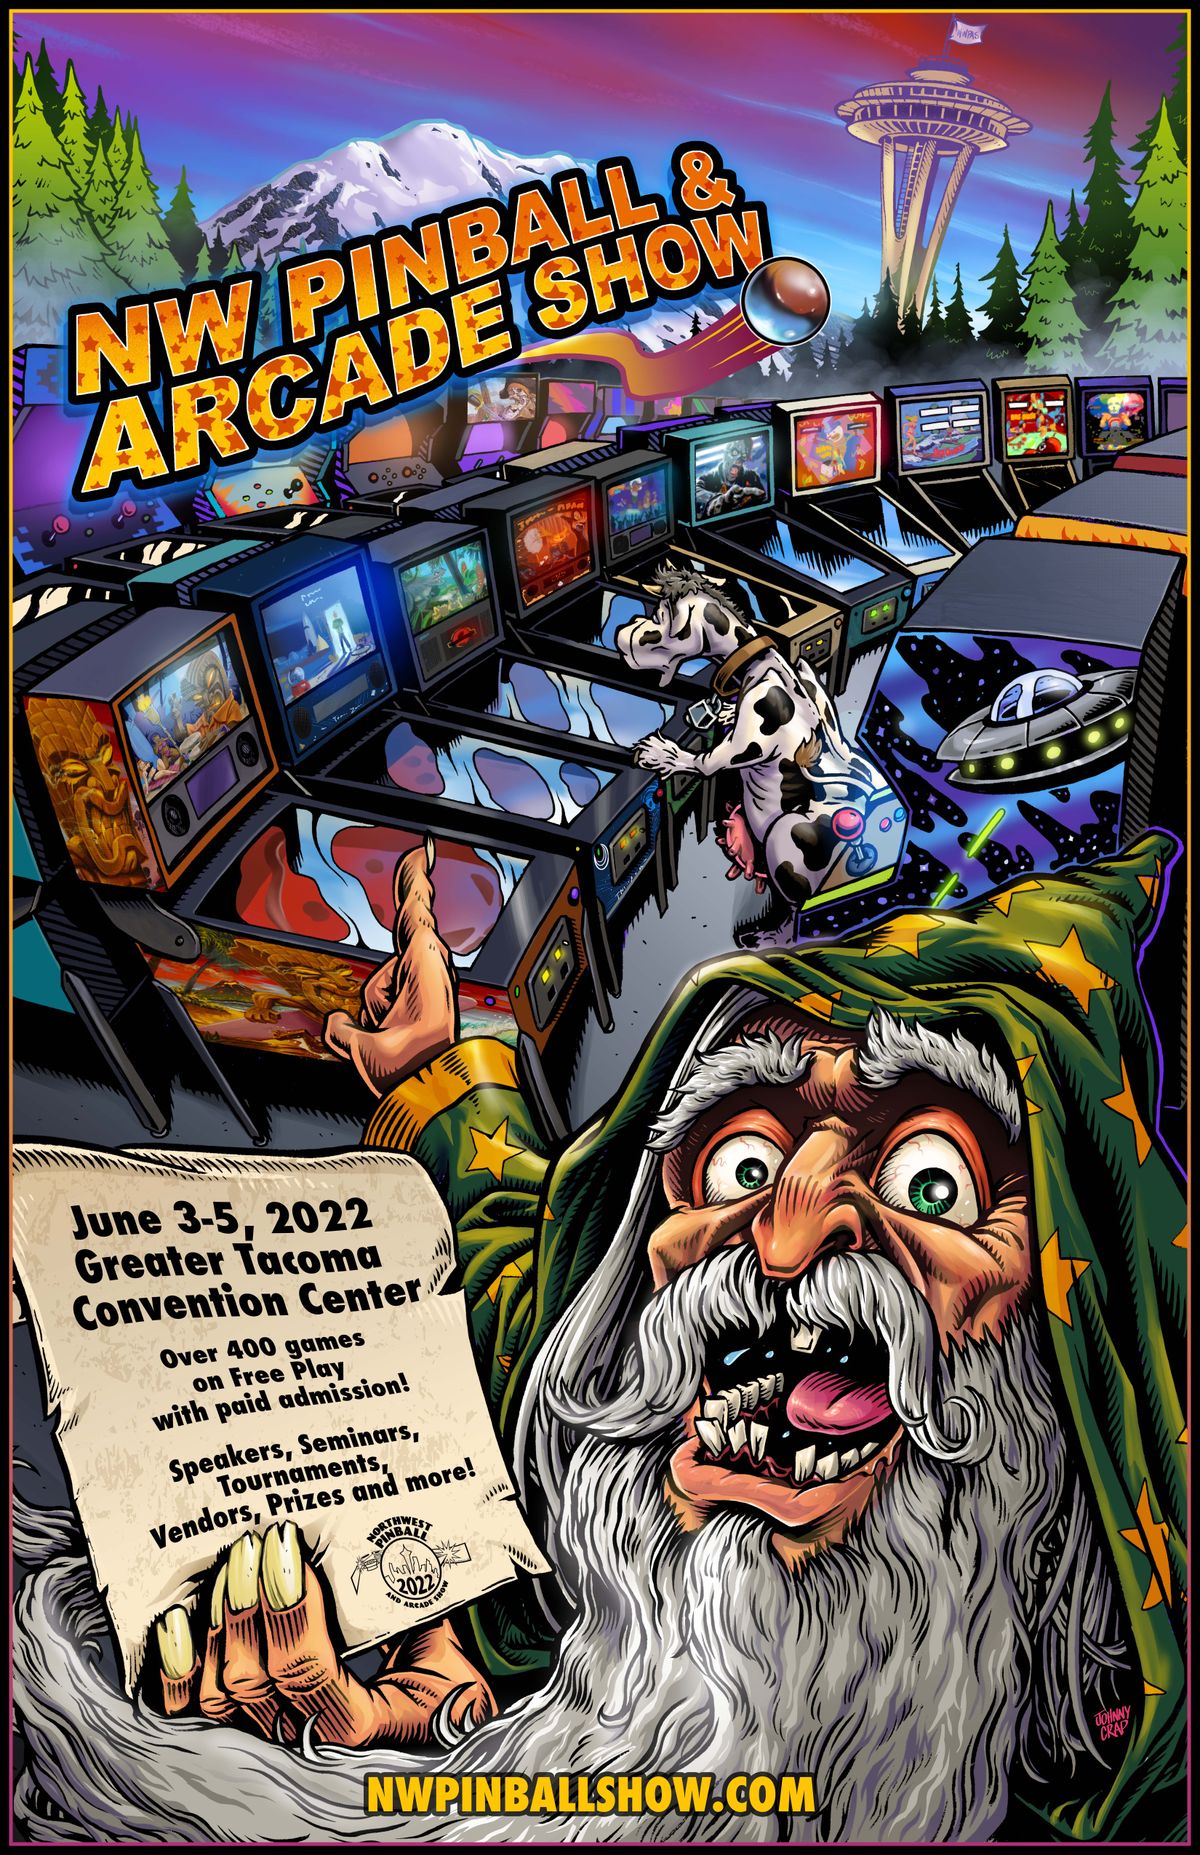 Arcade Show Games